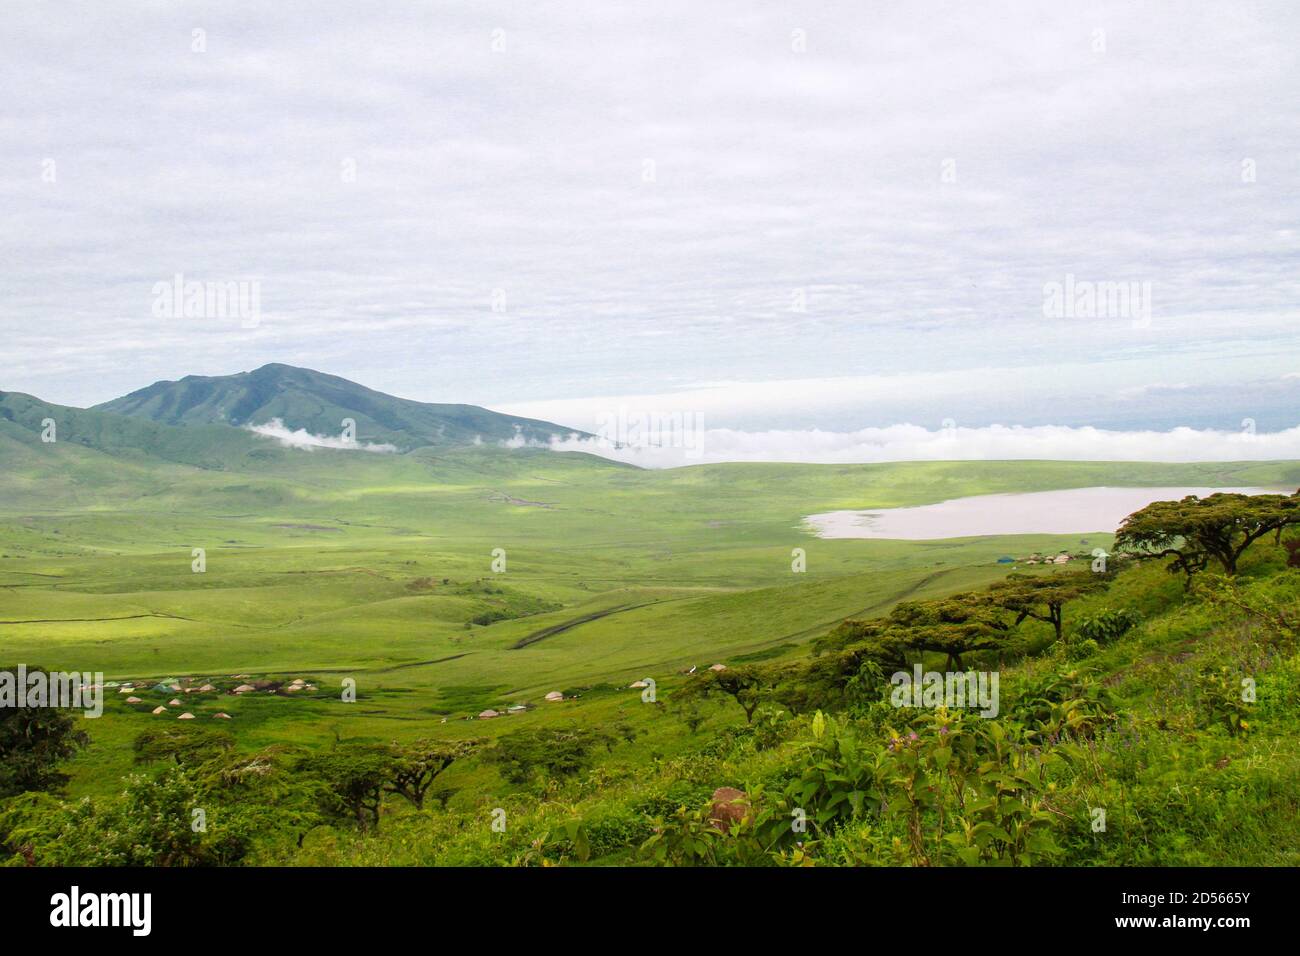 (201013) -- PEKING, 13. Oktober 2020 (Xinhua) -- das Foto vom 27. Januar 2020 zeigt die Landschaft des Ngorongoro Conservation Area in Tansania. (Xinhua) Stockfoto